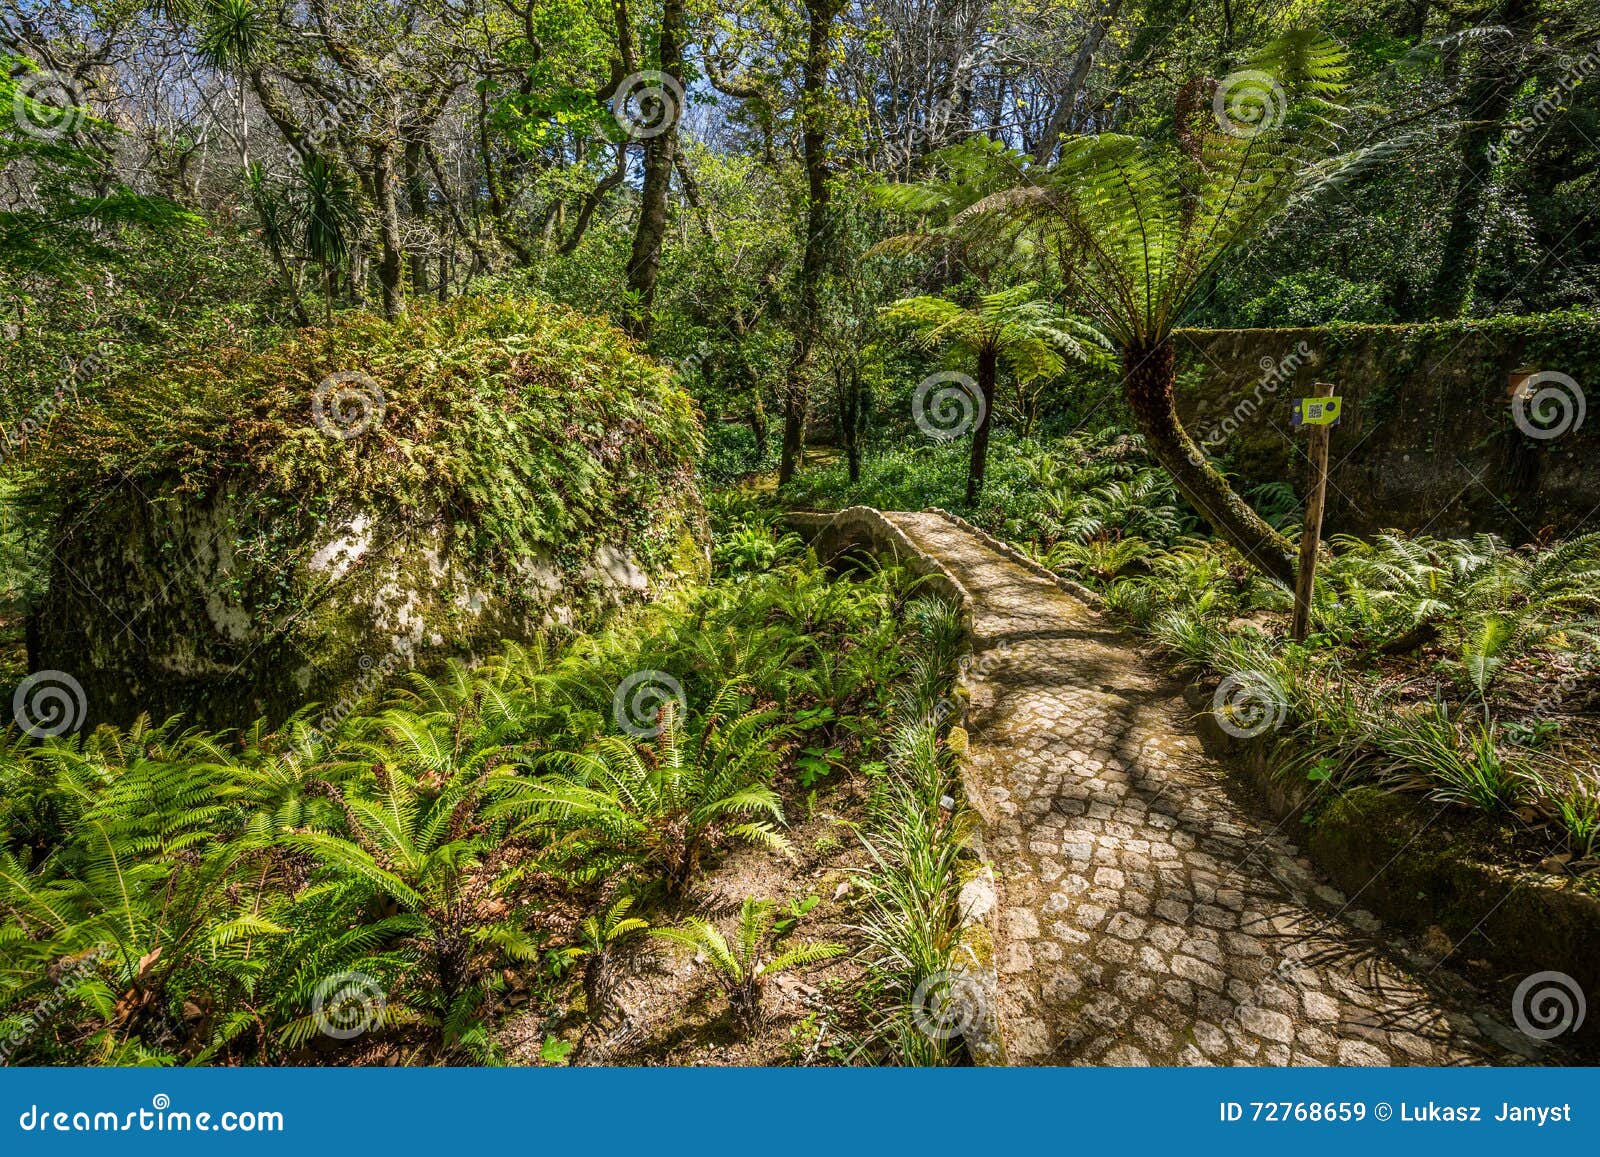 Garden Of Eden Garden Located In Sintra Portugal Stock Image